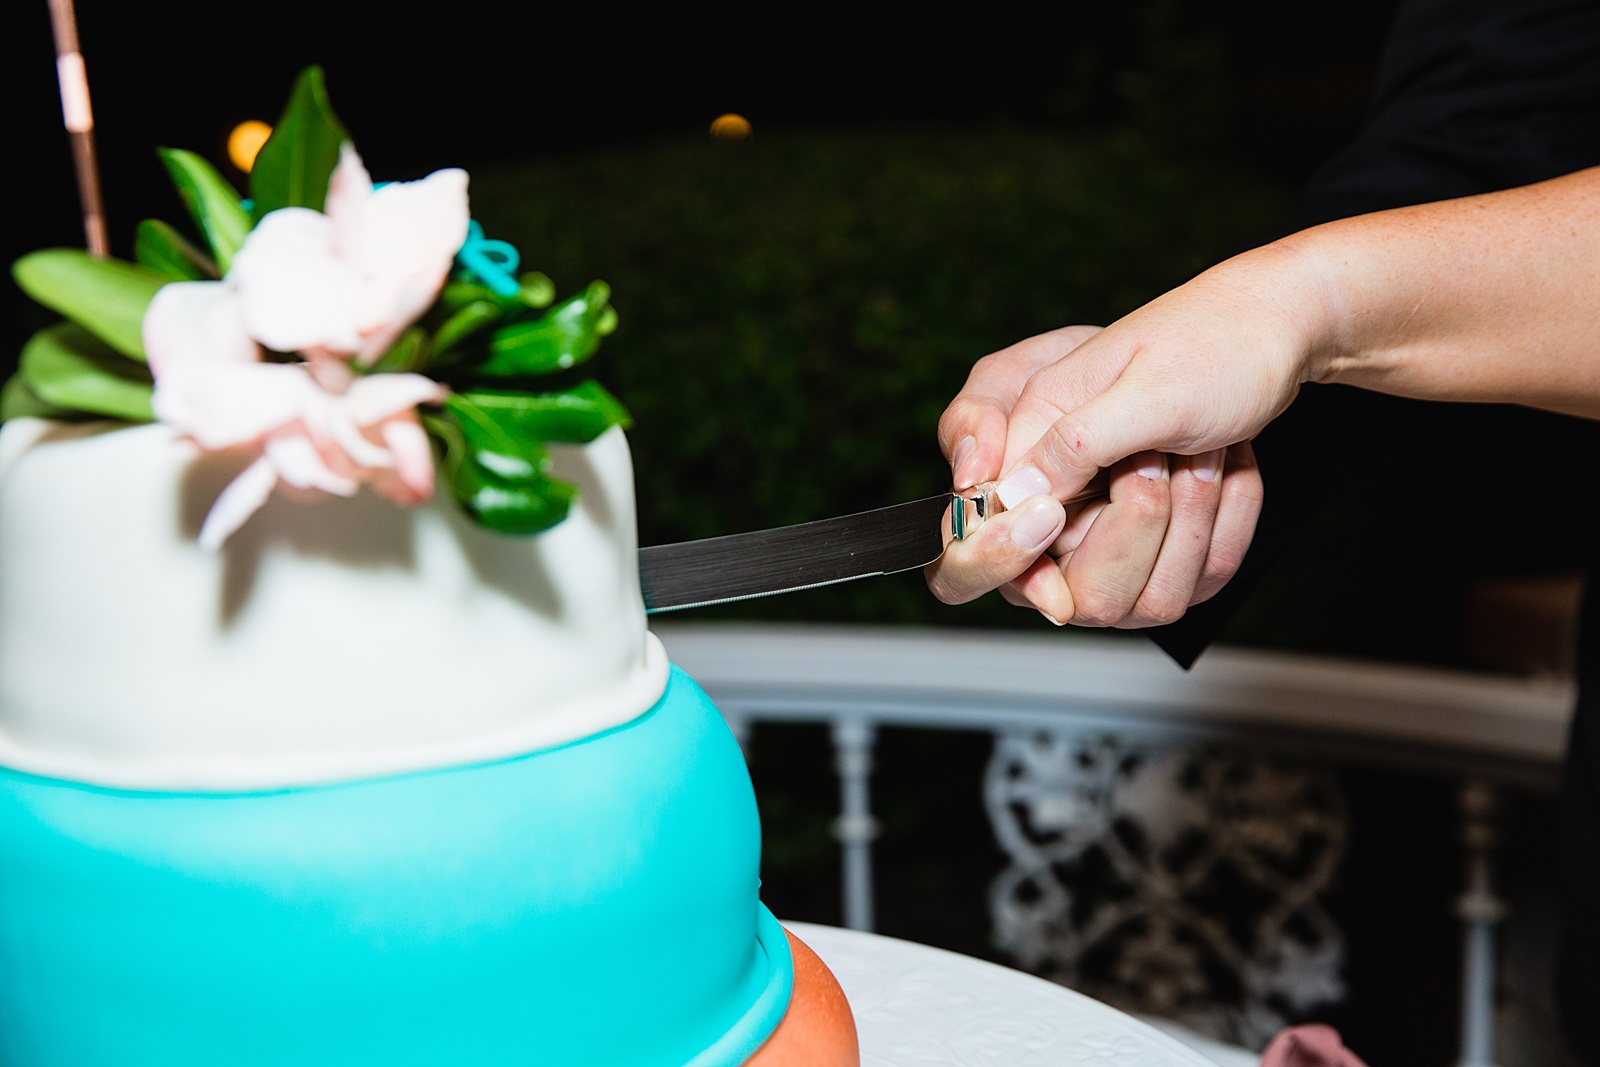 Bride and Groom cutting their wedding cake at their Stonebridge Manor wedding reception by Arizona wedding photographer PMA Photography.